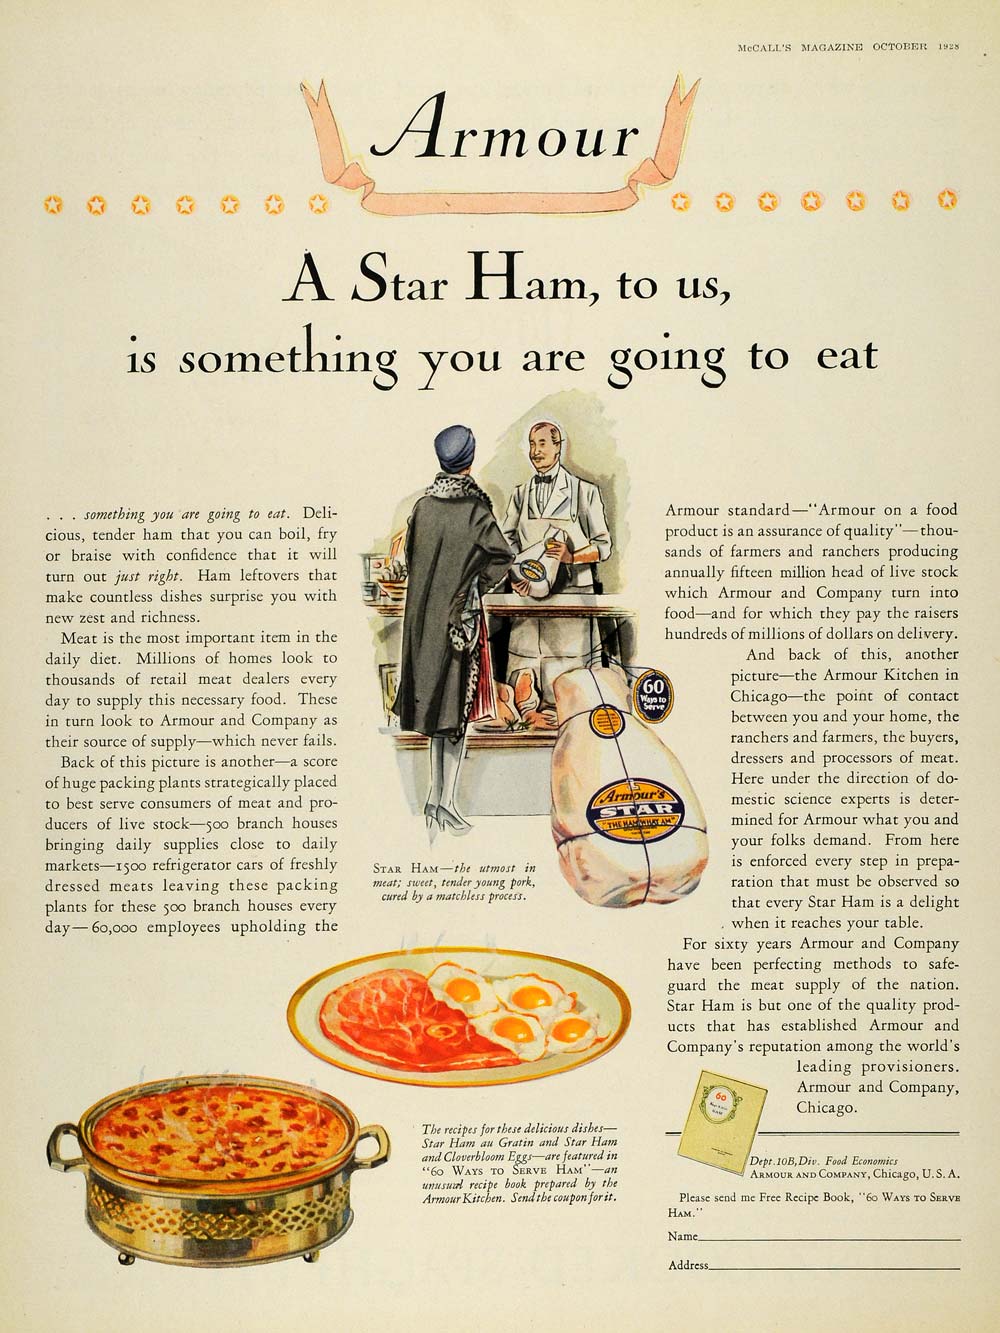 1928 Ad Armour & Co. Star Ham Cloverbloom Eggs Dish - ORIGINAL ADVERTISING MCC4